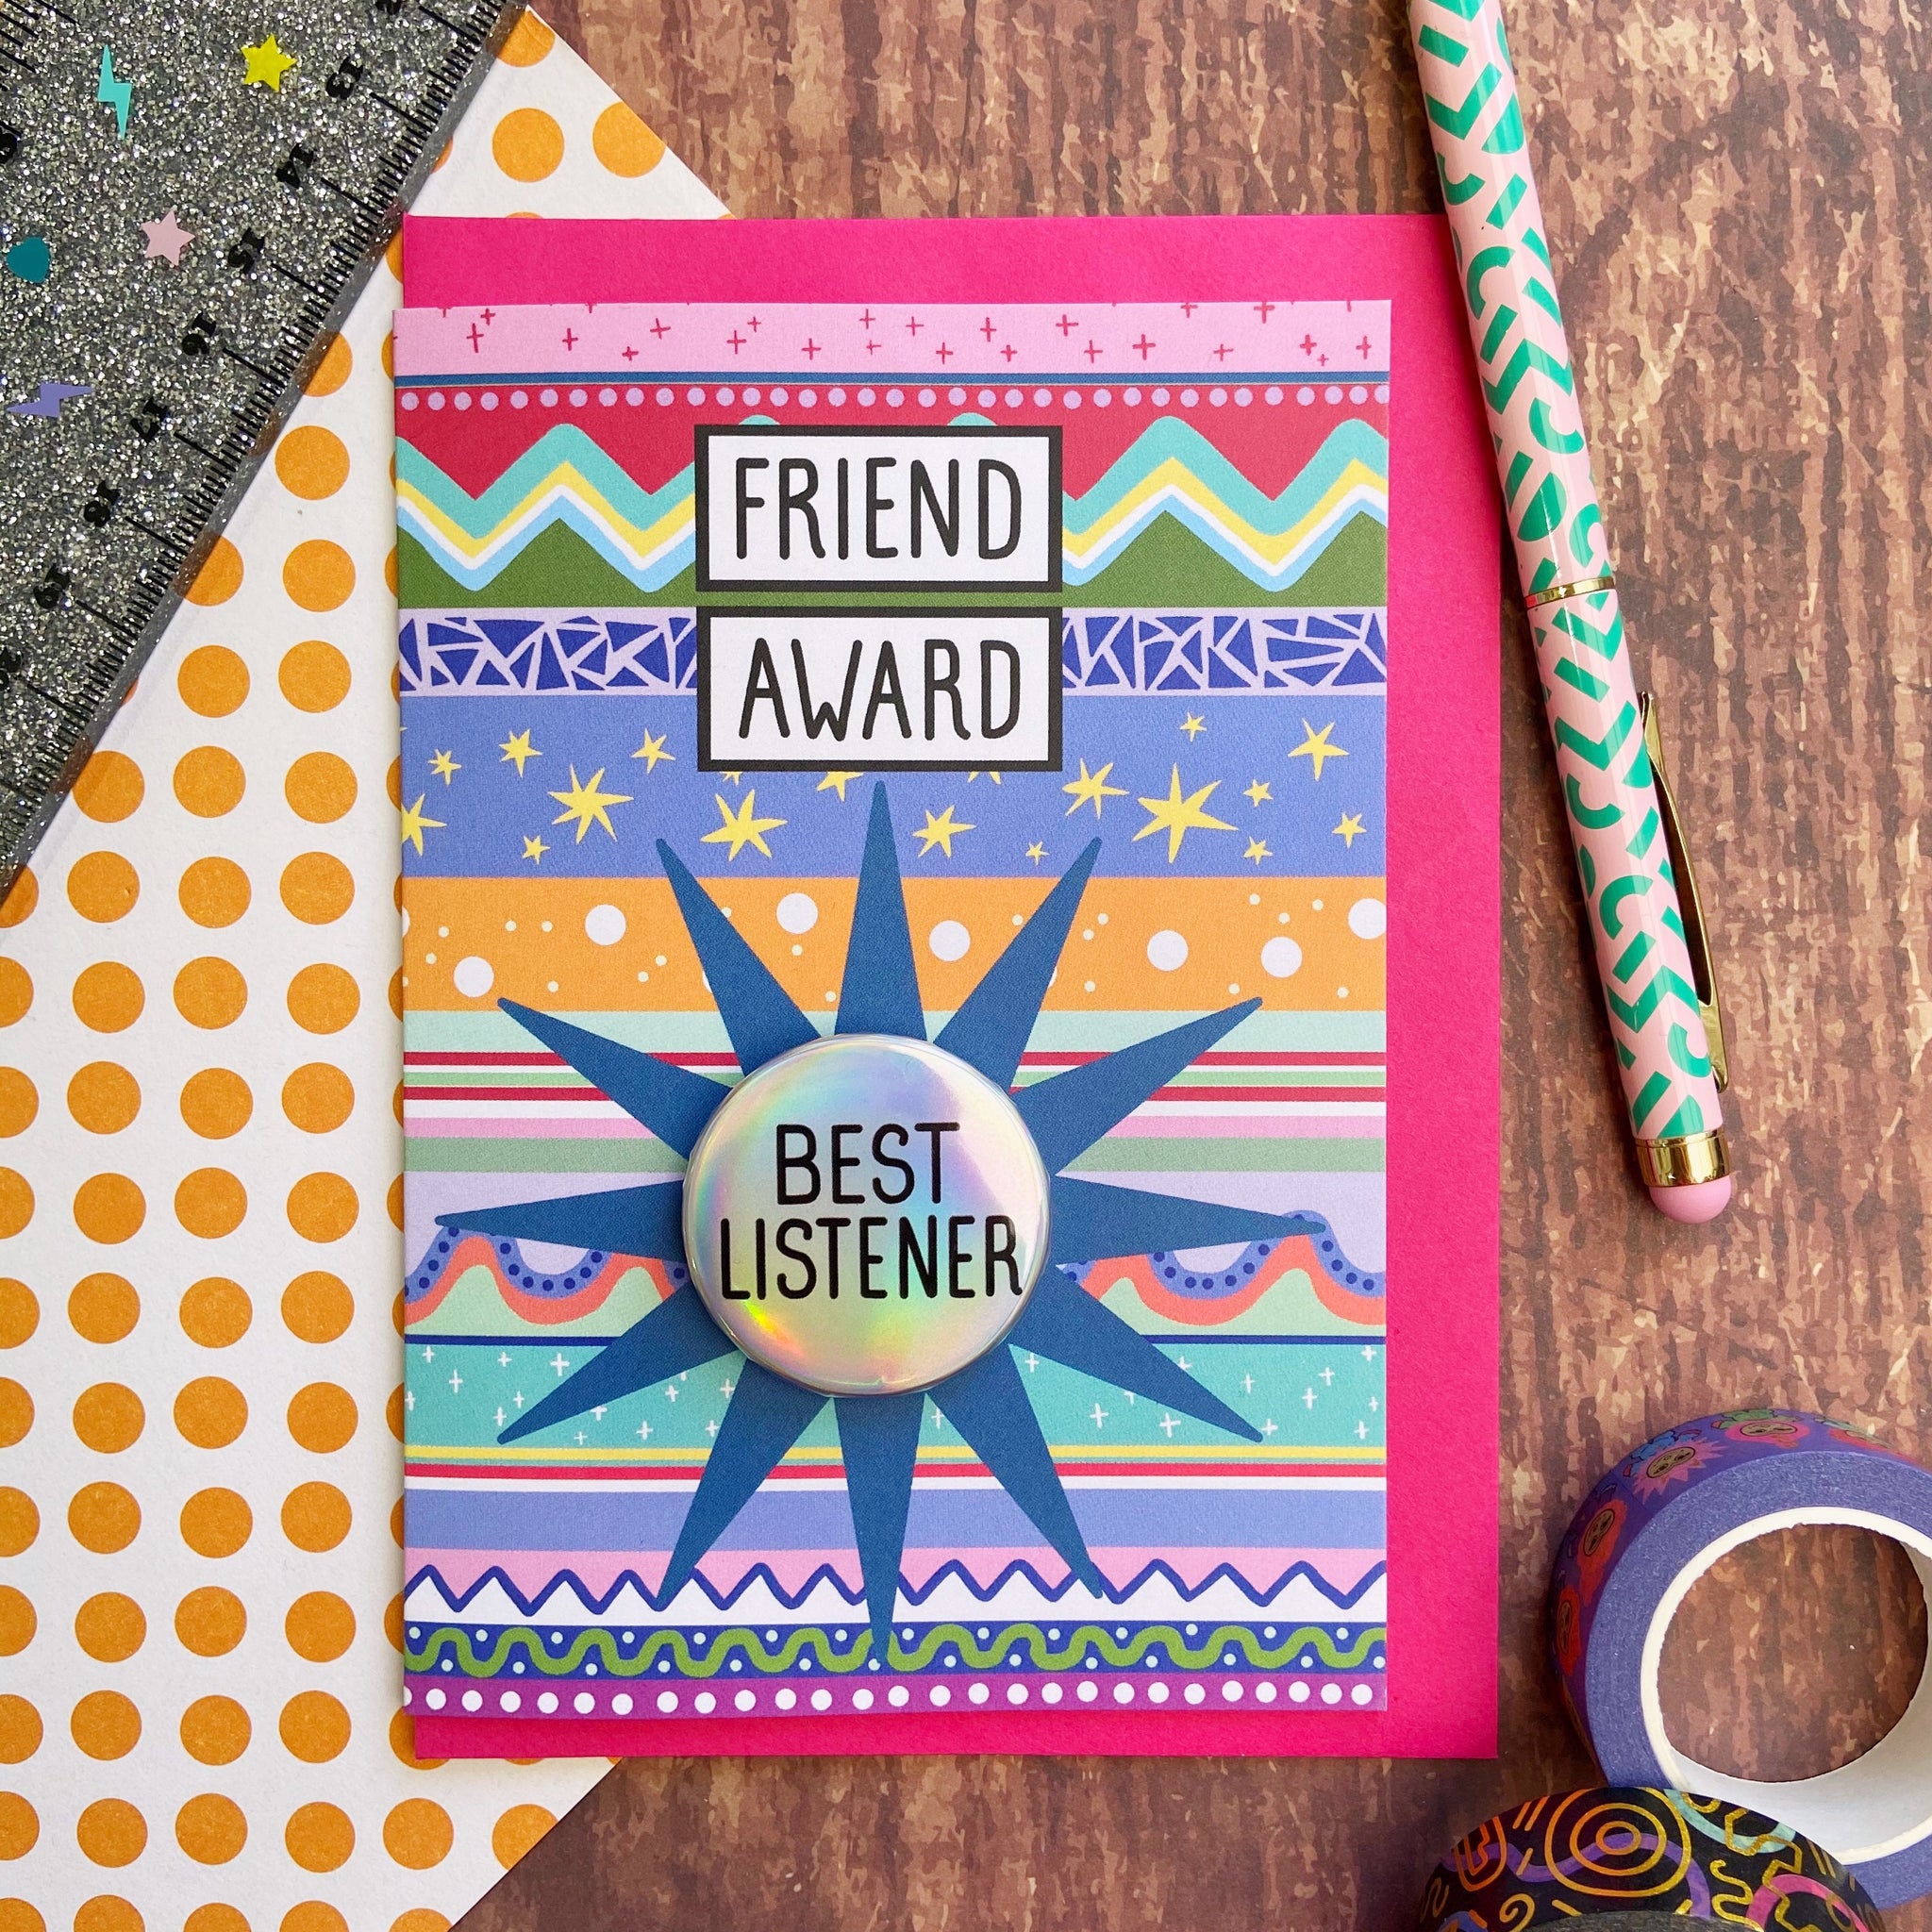 Best Listener - Friend Award Card